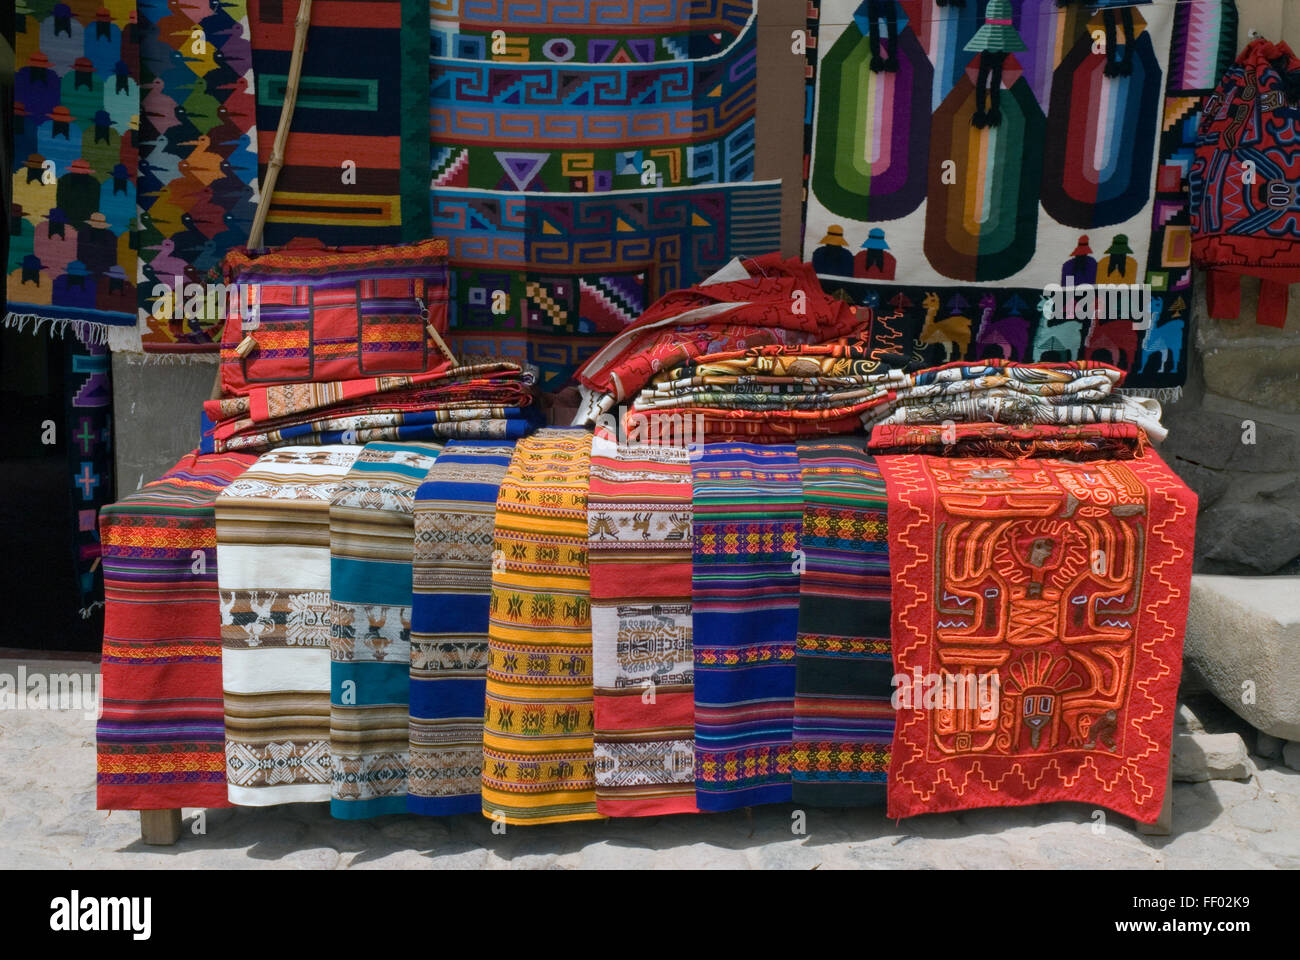 Peru, Ollantaytambo, traditional, patterned fabrics on display at market stall Stock Photo